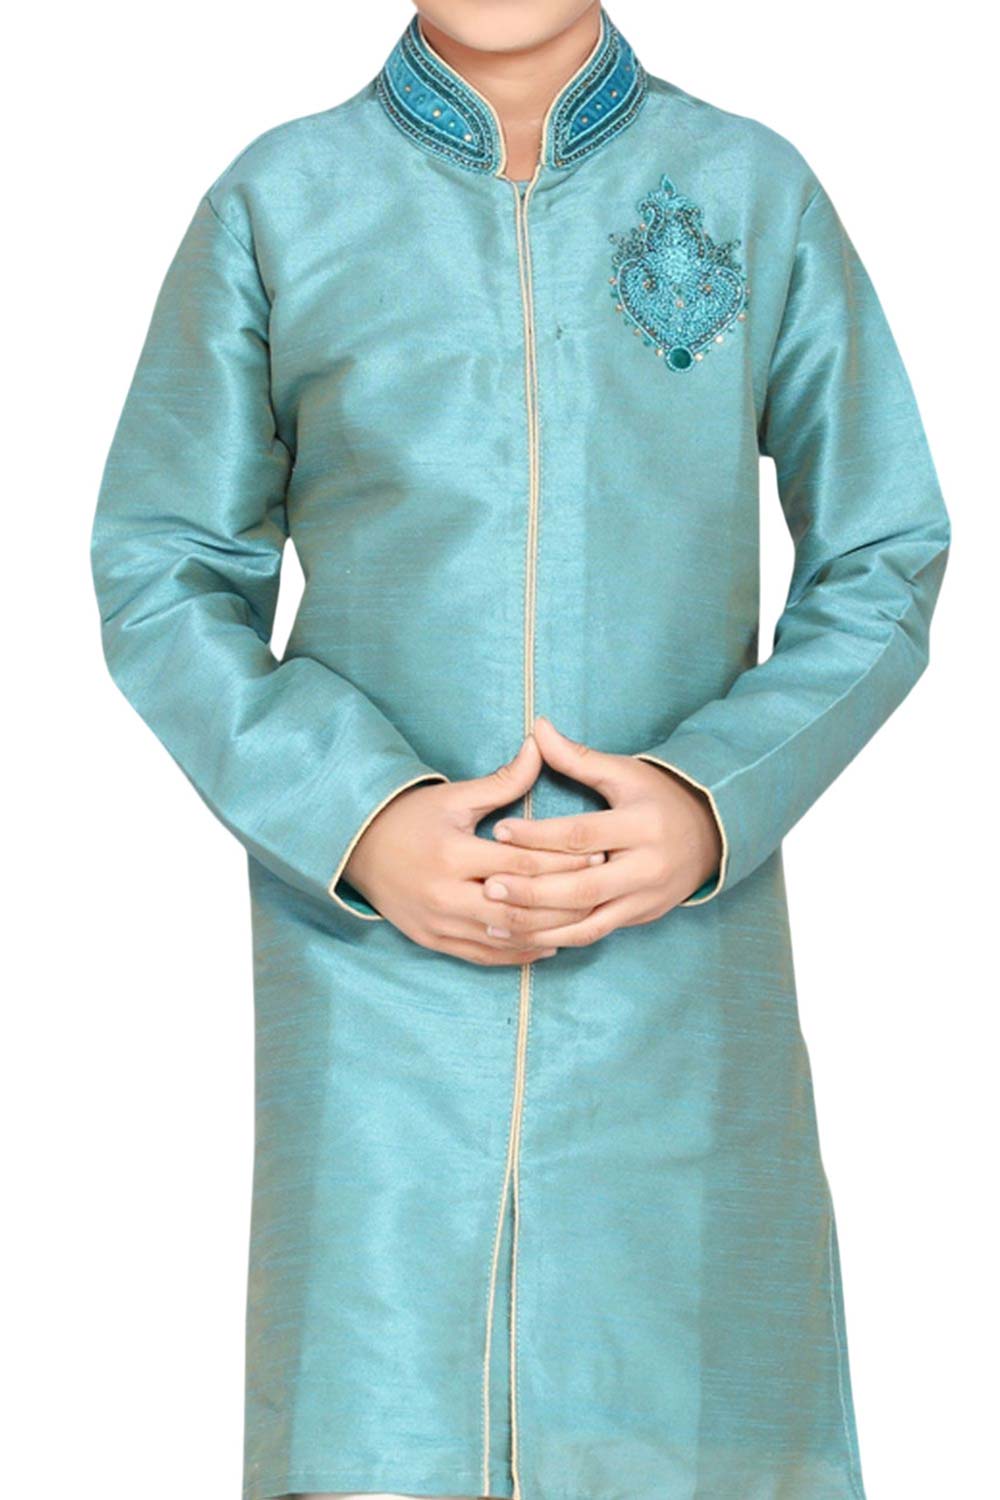 Boys Turquoise Art Dupion Silk Neck Embroidered Sherwani Set